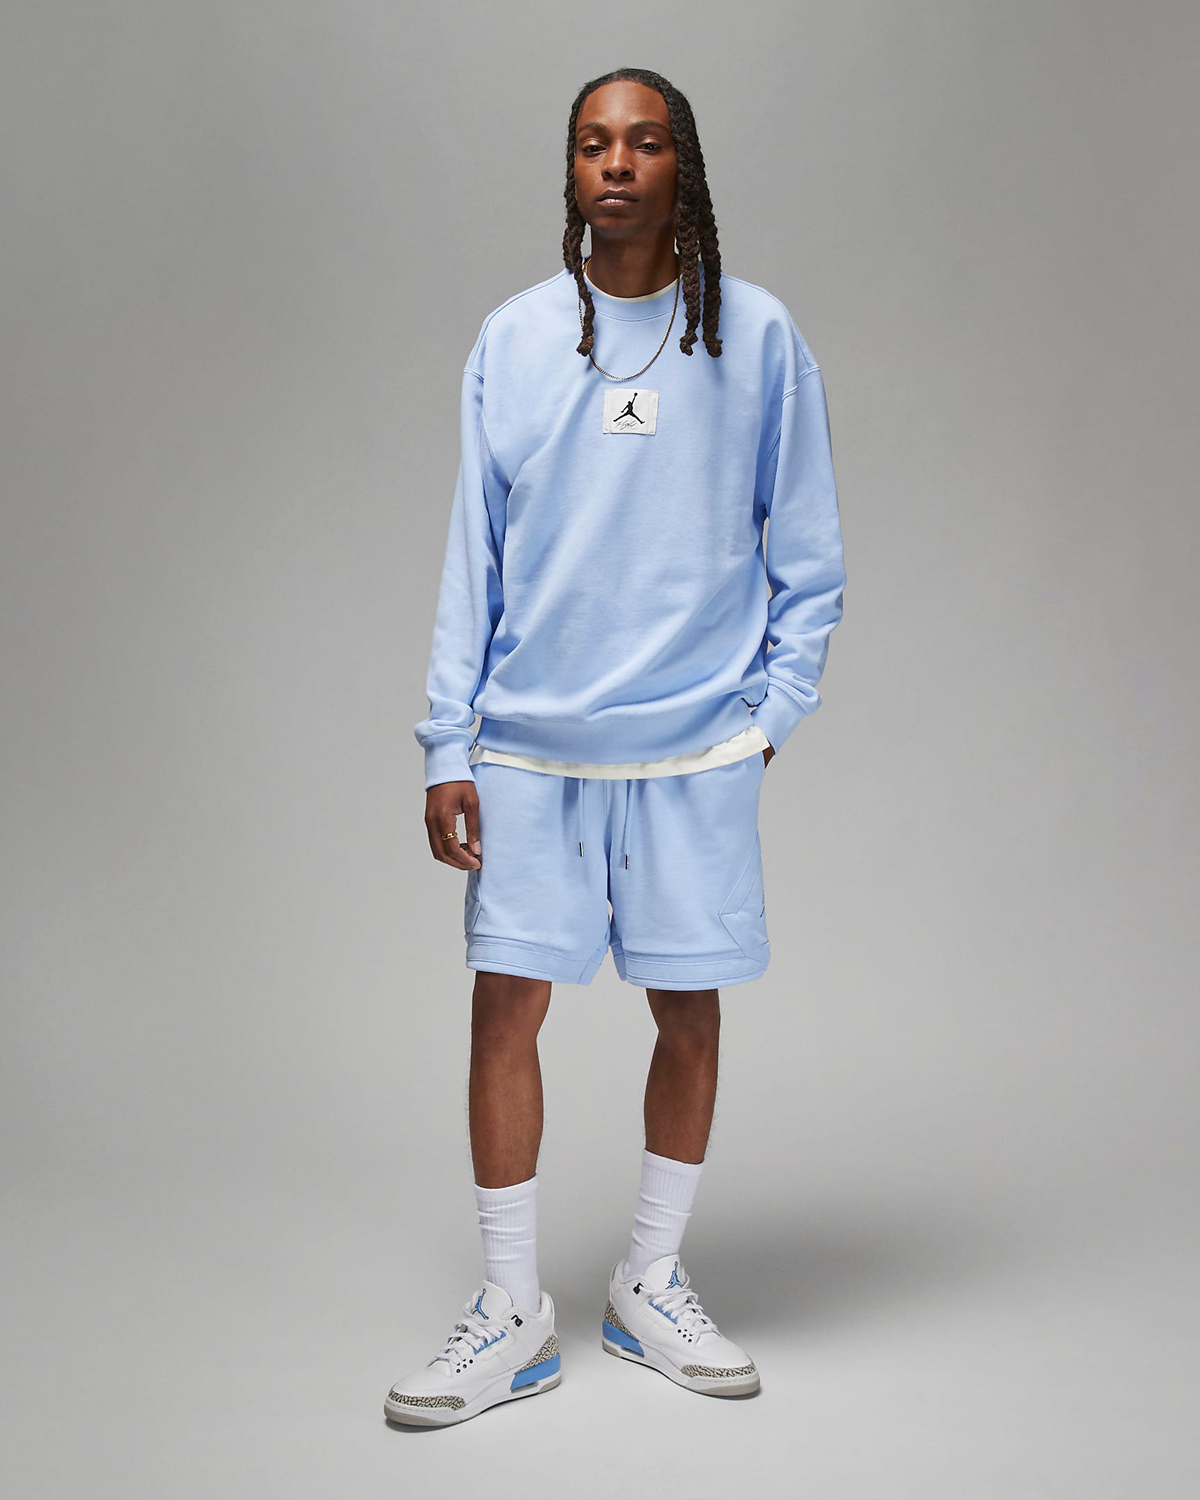 Jordan-Essentials-Sweatshirt-Top-Royal-Tint-Outfit